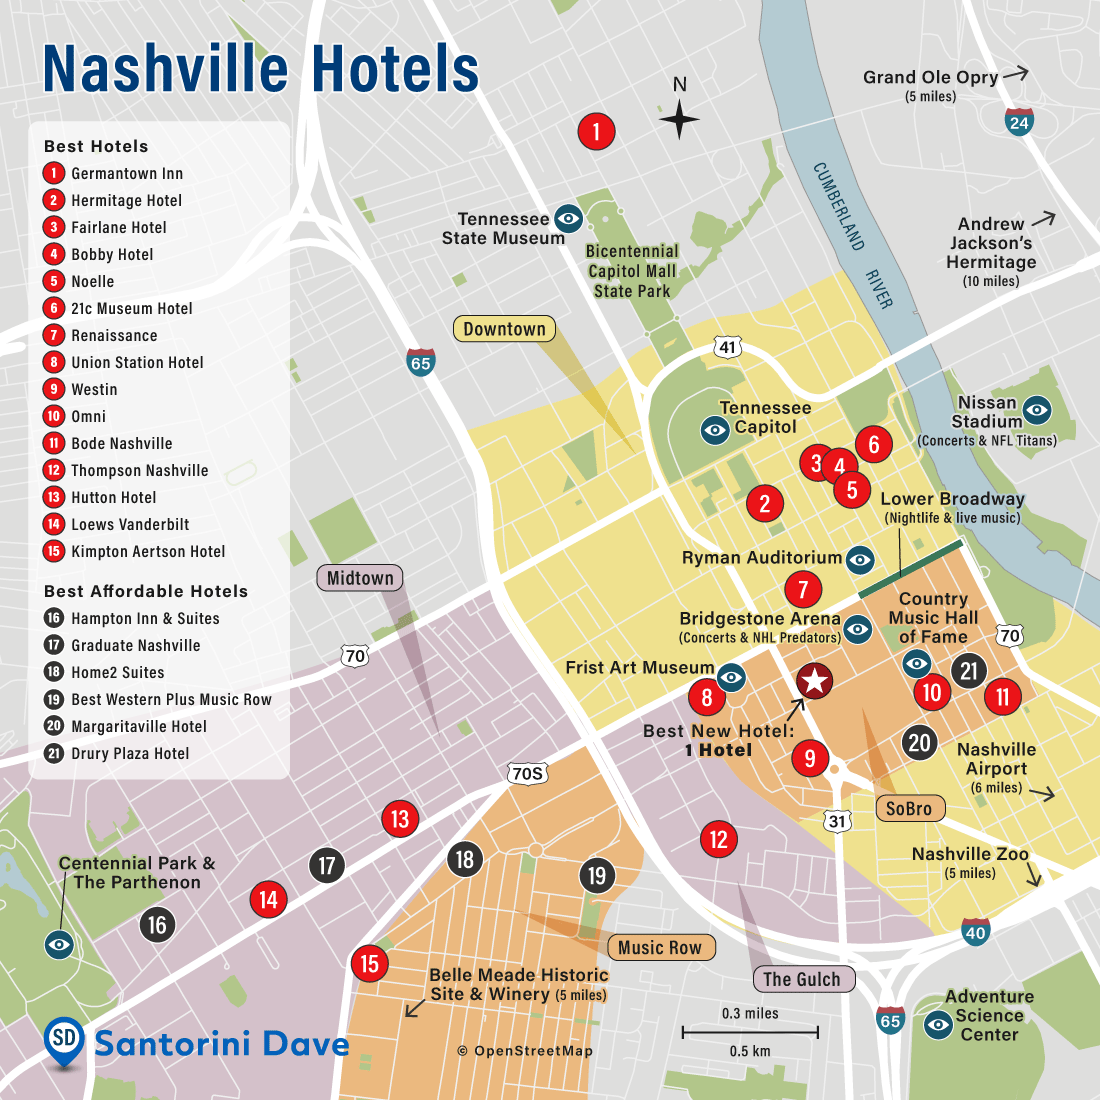 Map of Nashville Hotels and Neighborhoods